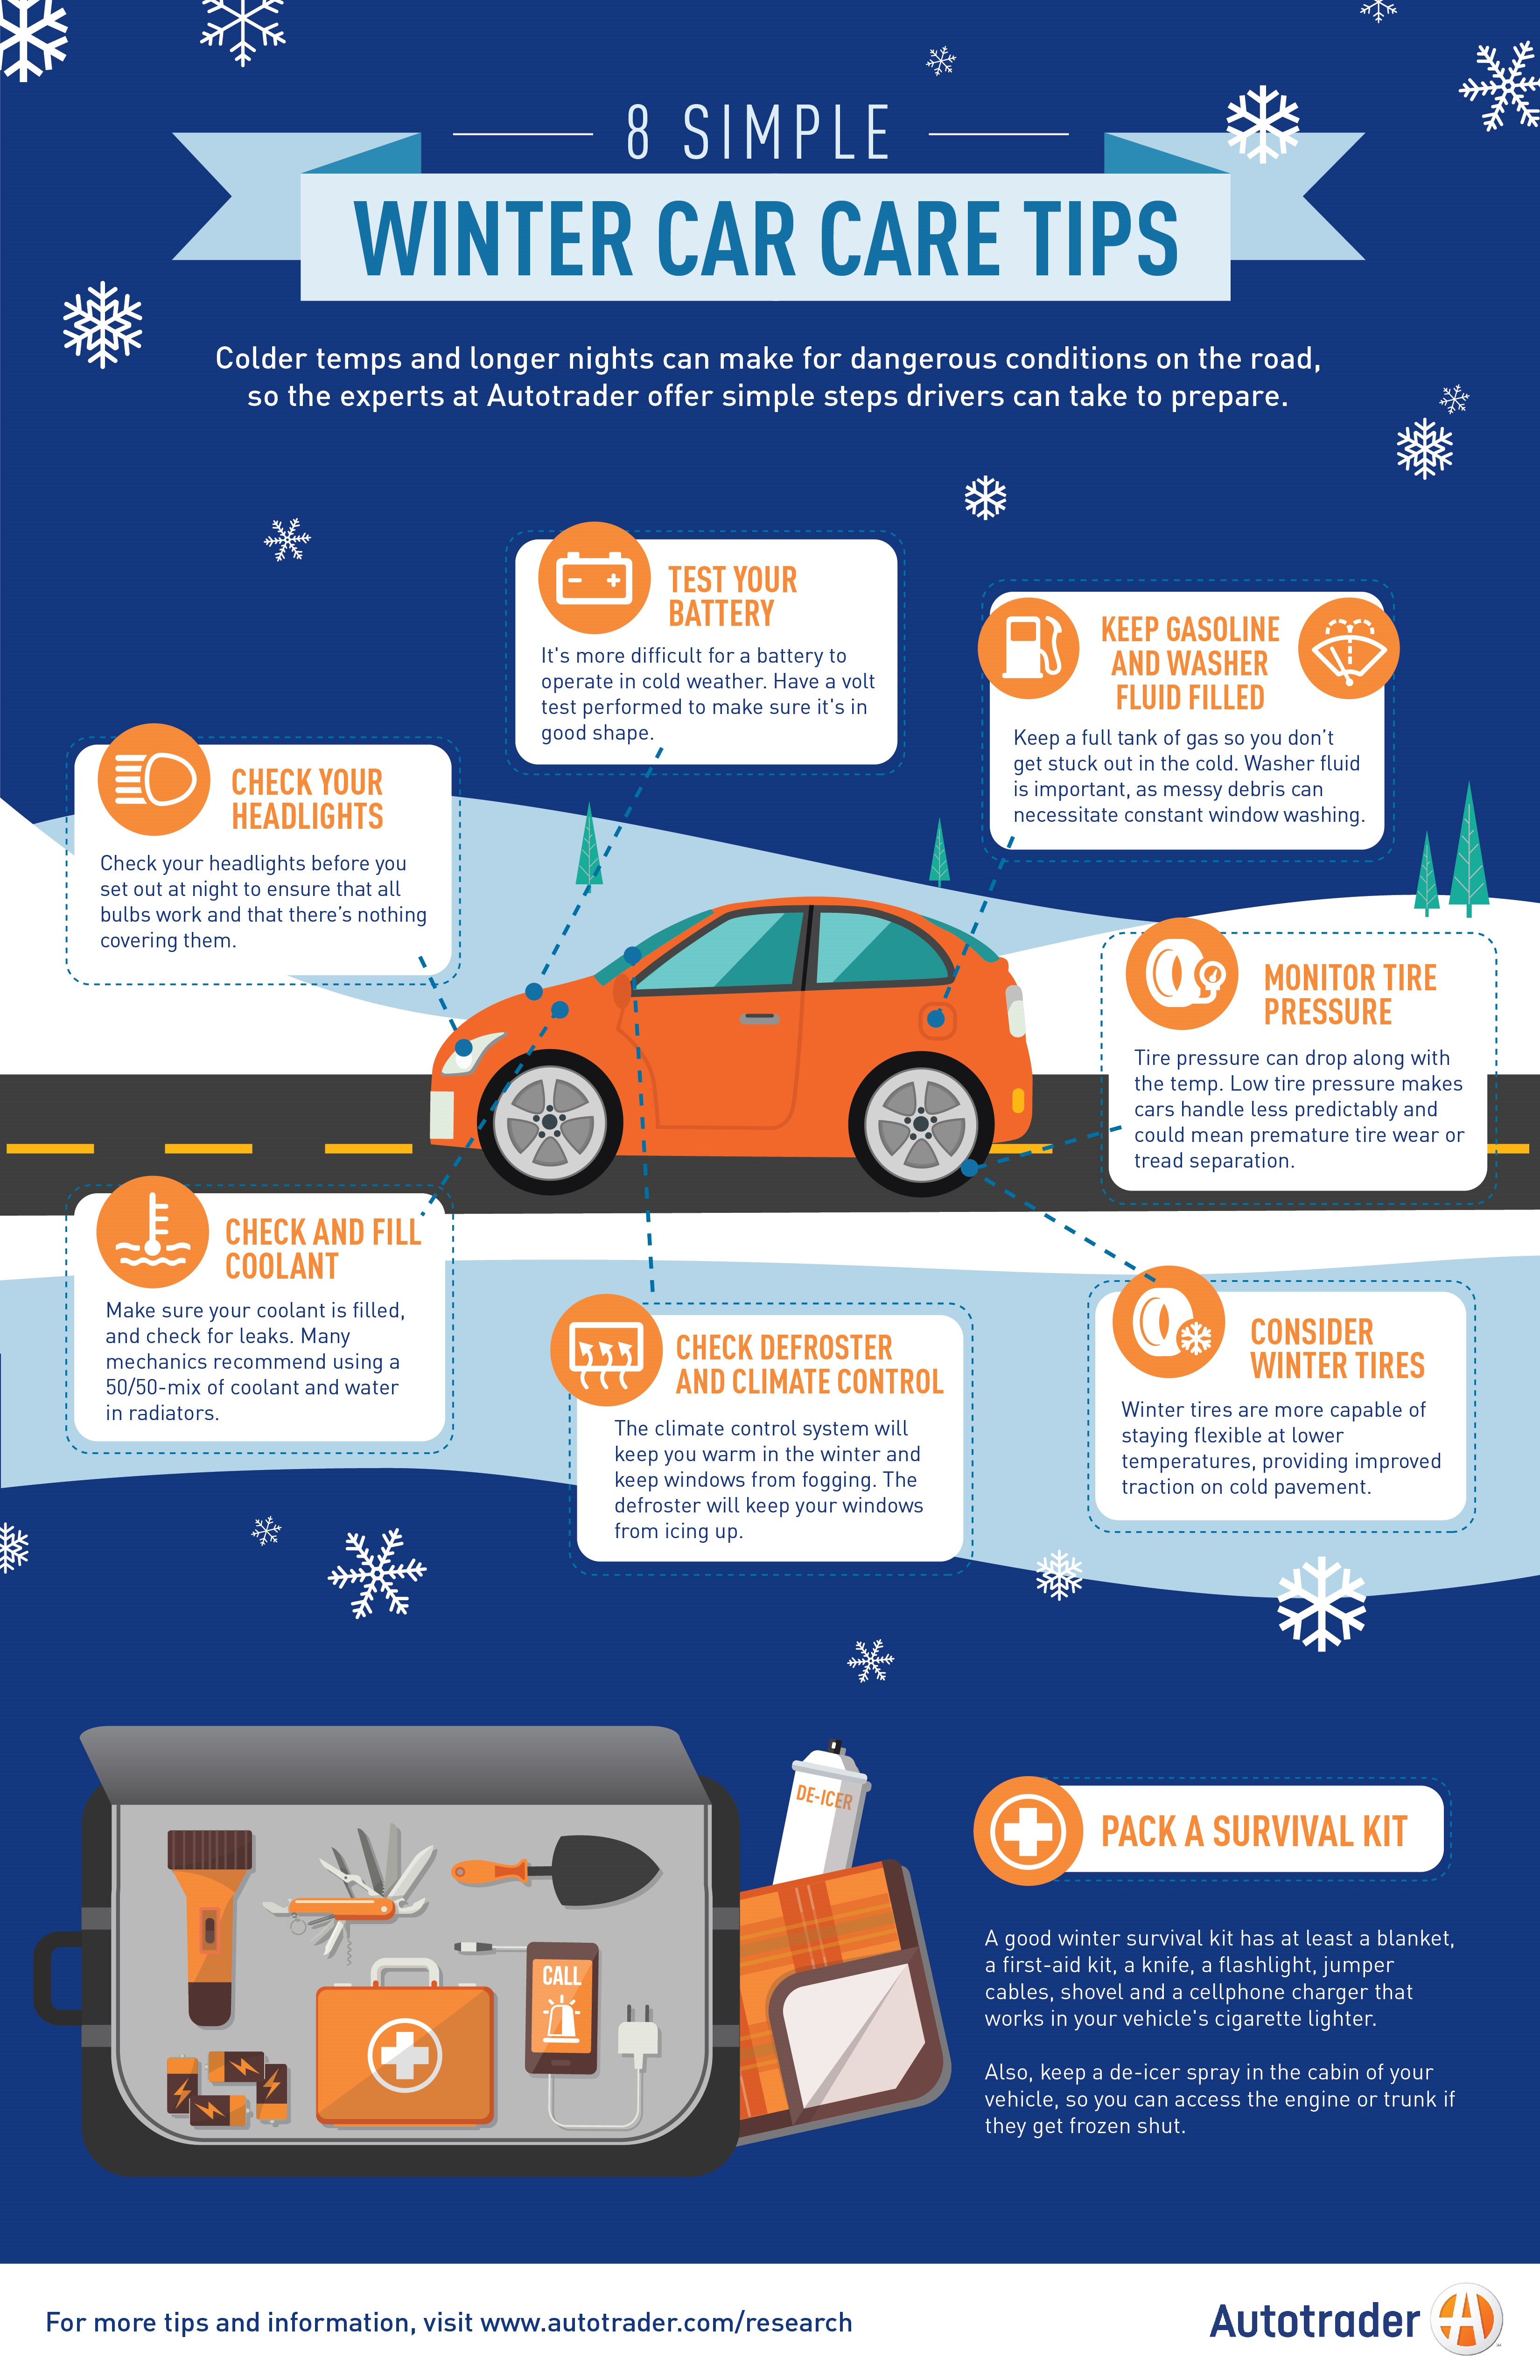 Autotrader experts offer simple winter car care tips. (PRNewsFoto/Autotrader)